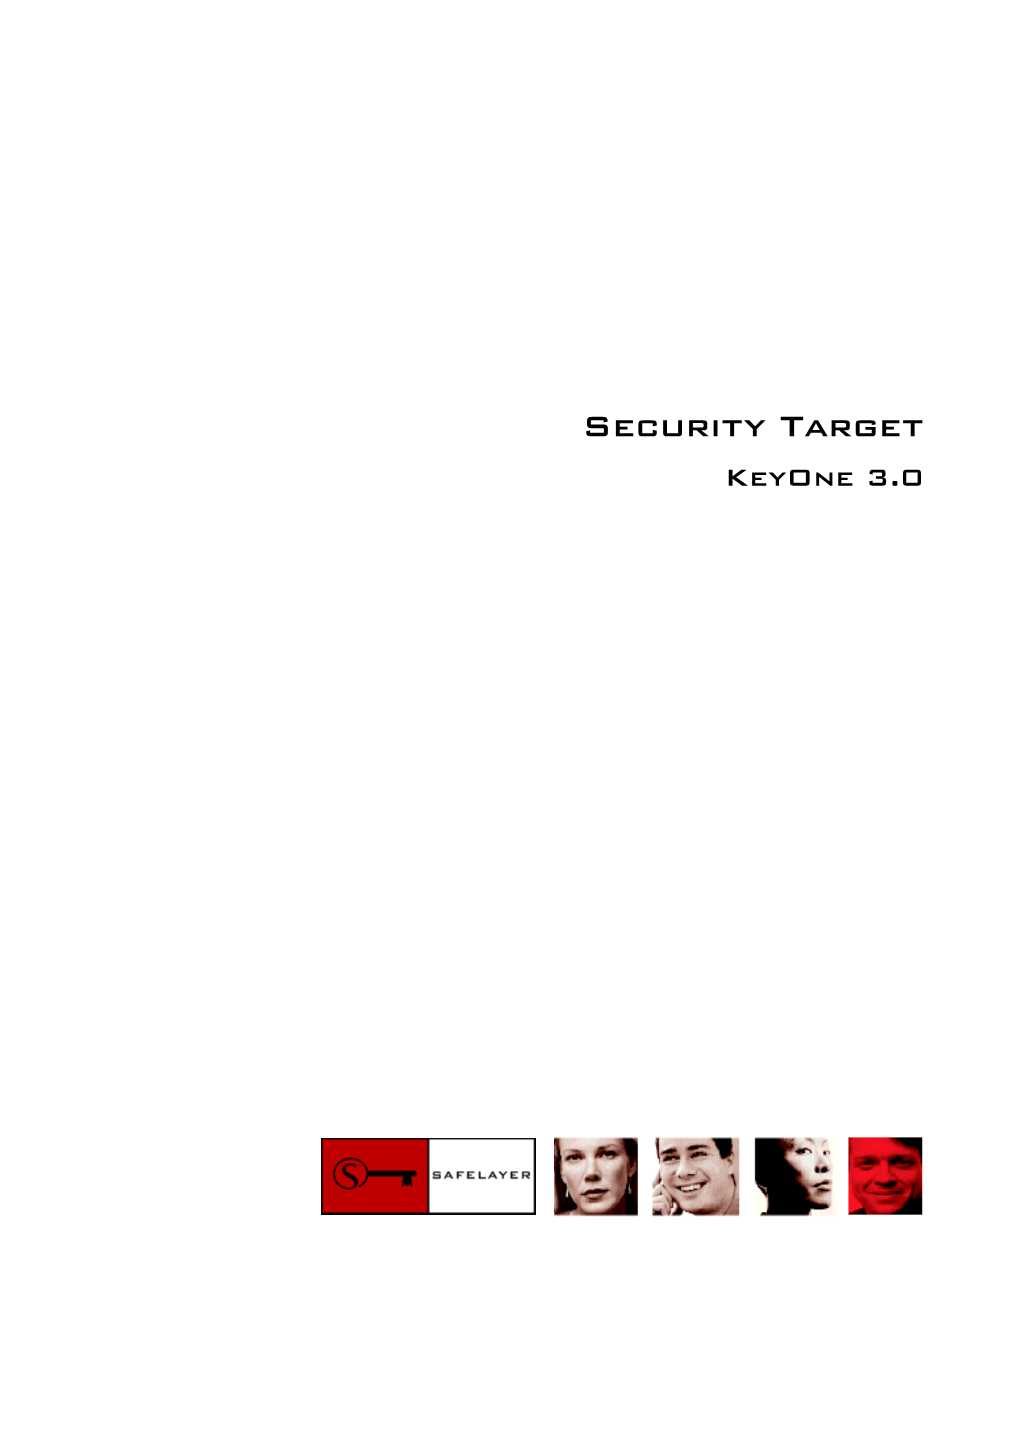 Keyone 3.0 Security Target